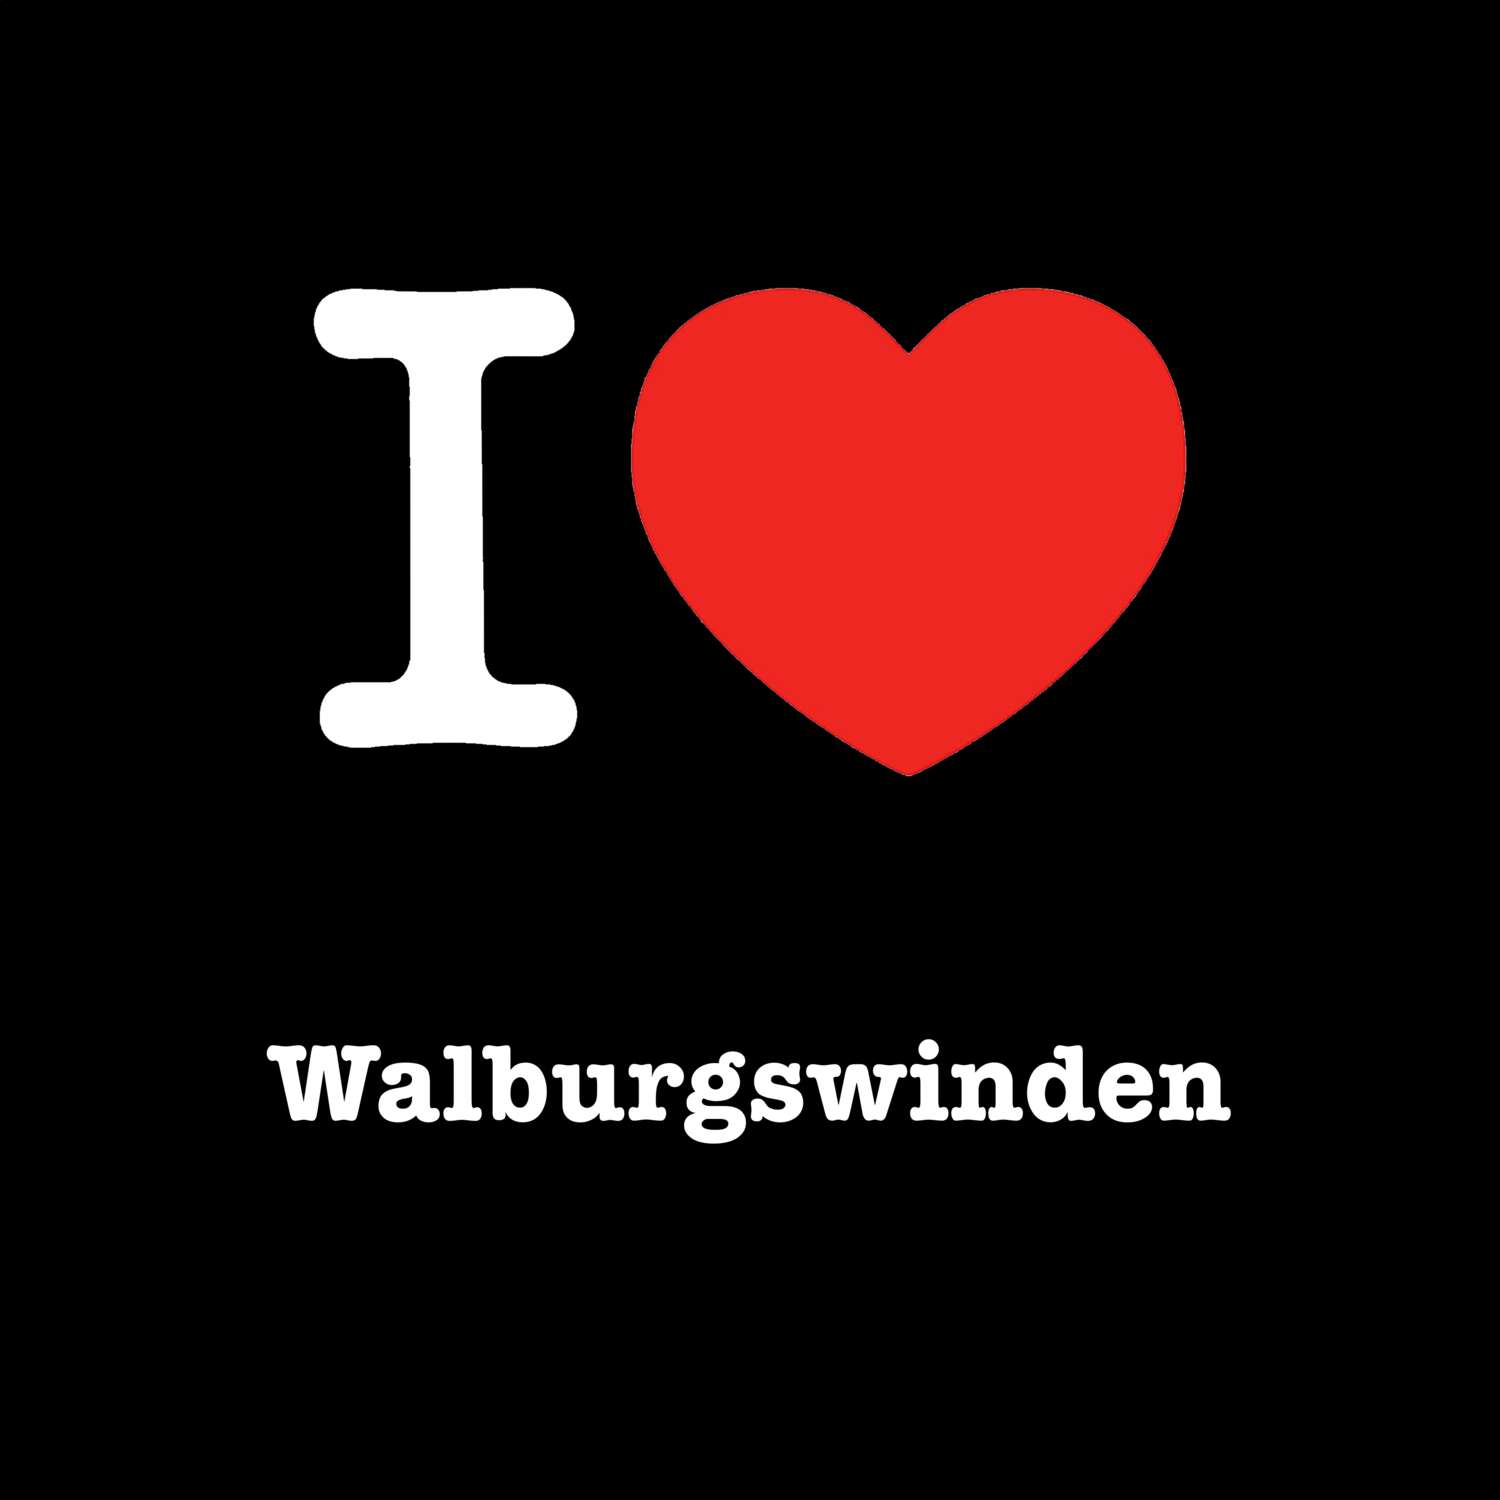 Walburgswinden T-Shirt »I love«